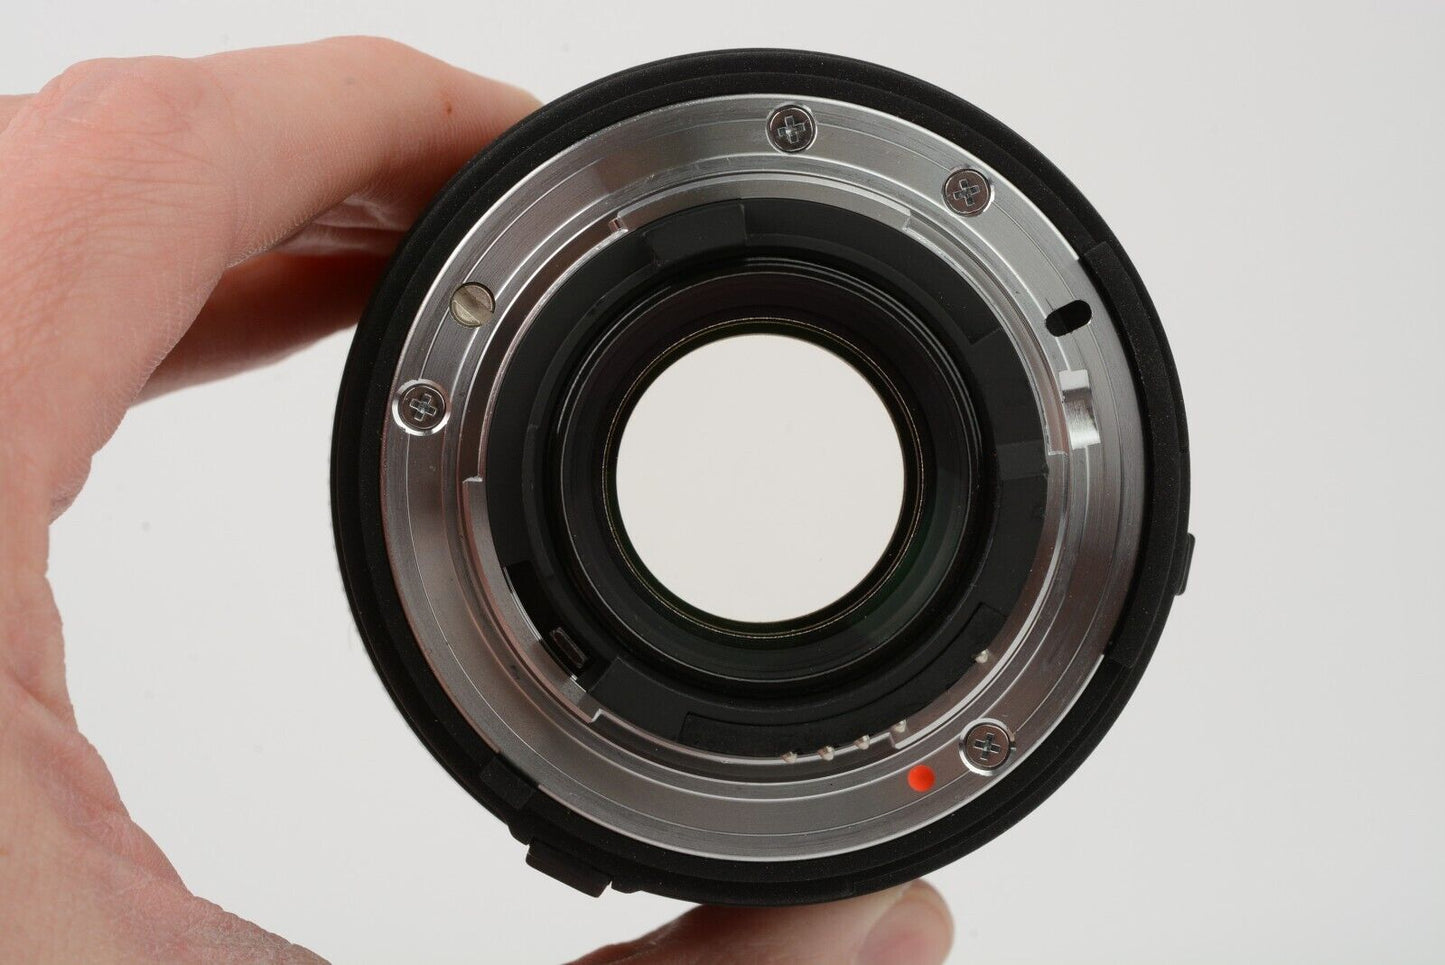 MINT- SIGMA EX 105mm 2.8 DG MACRO AF LENS FOR NIKON, CASE+UV+CAPS